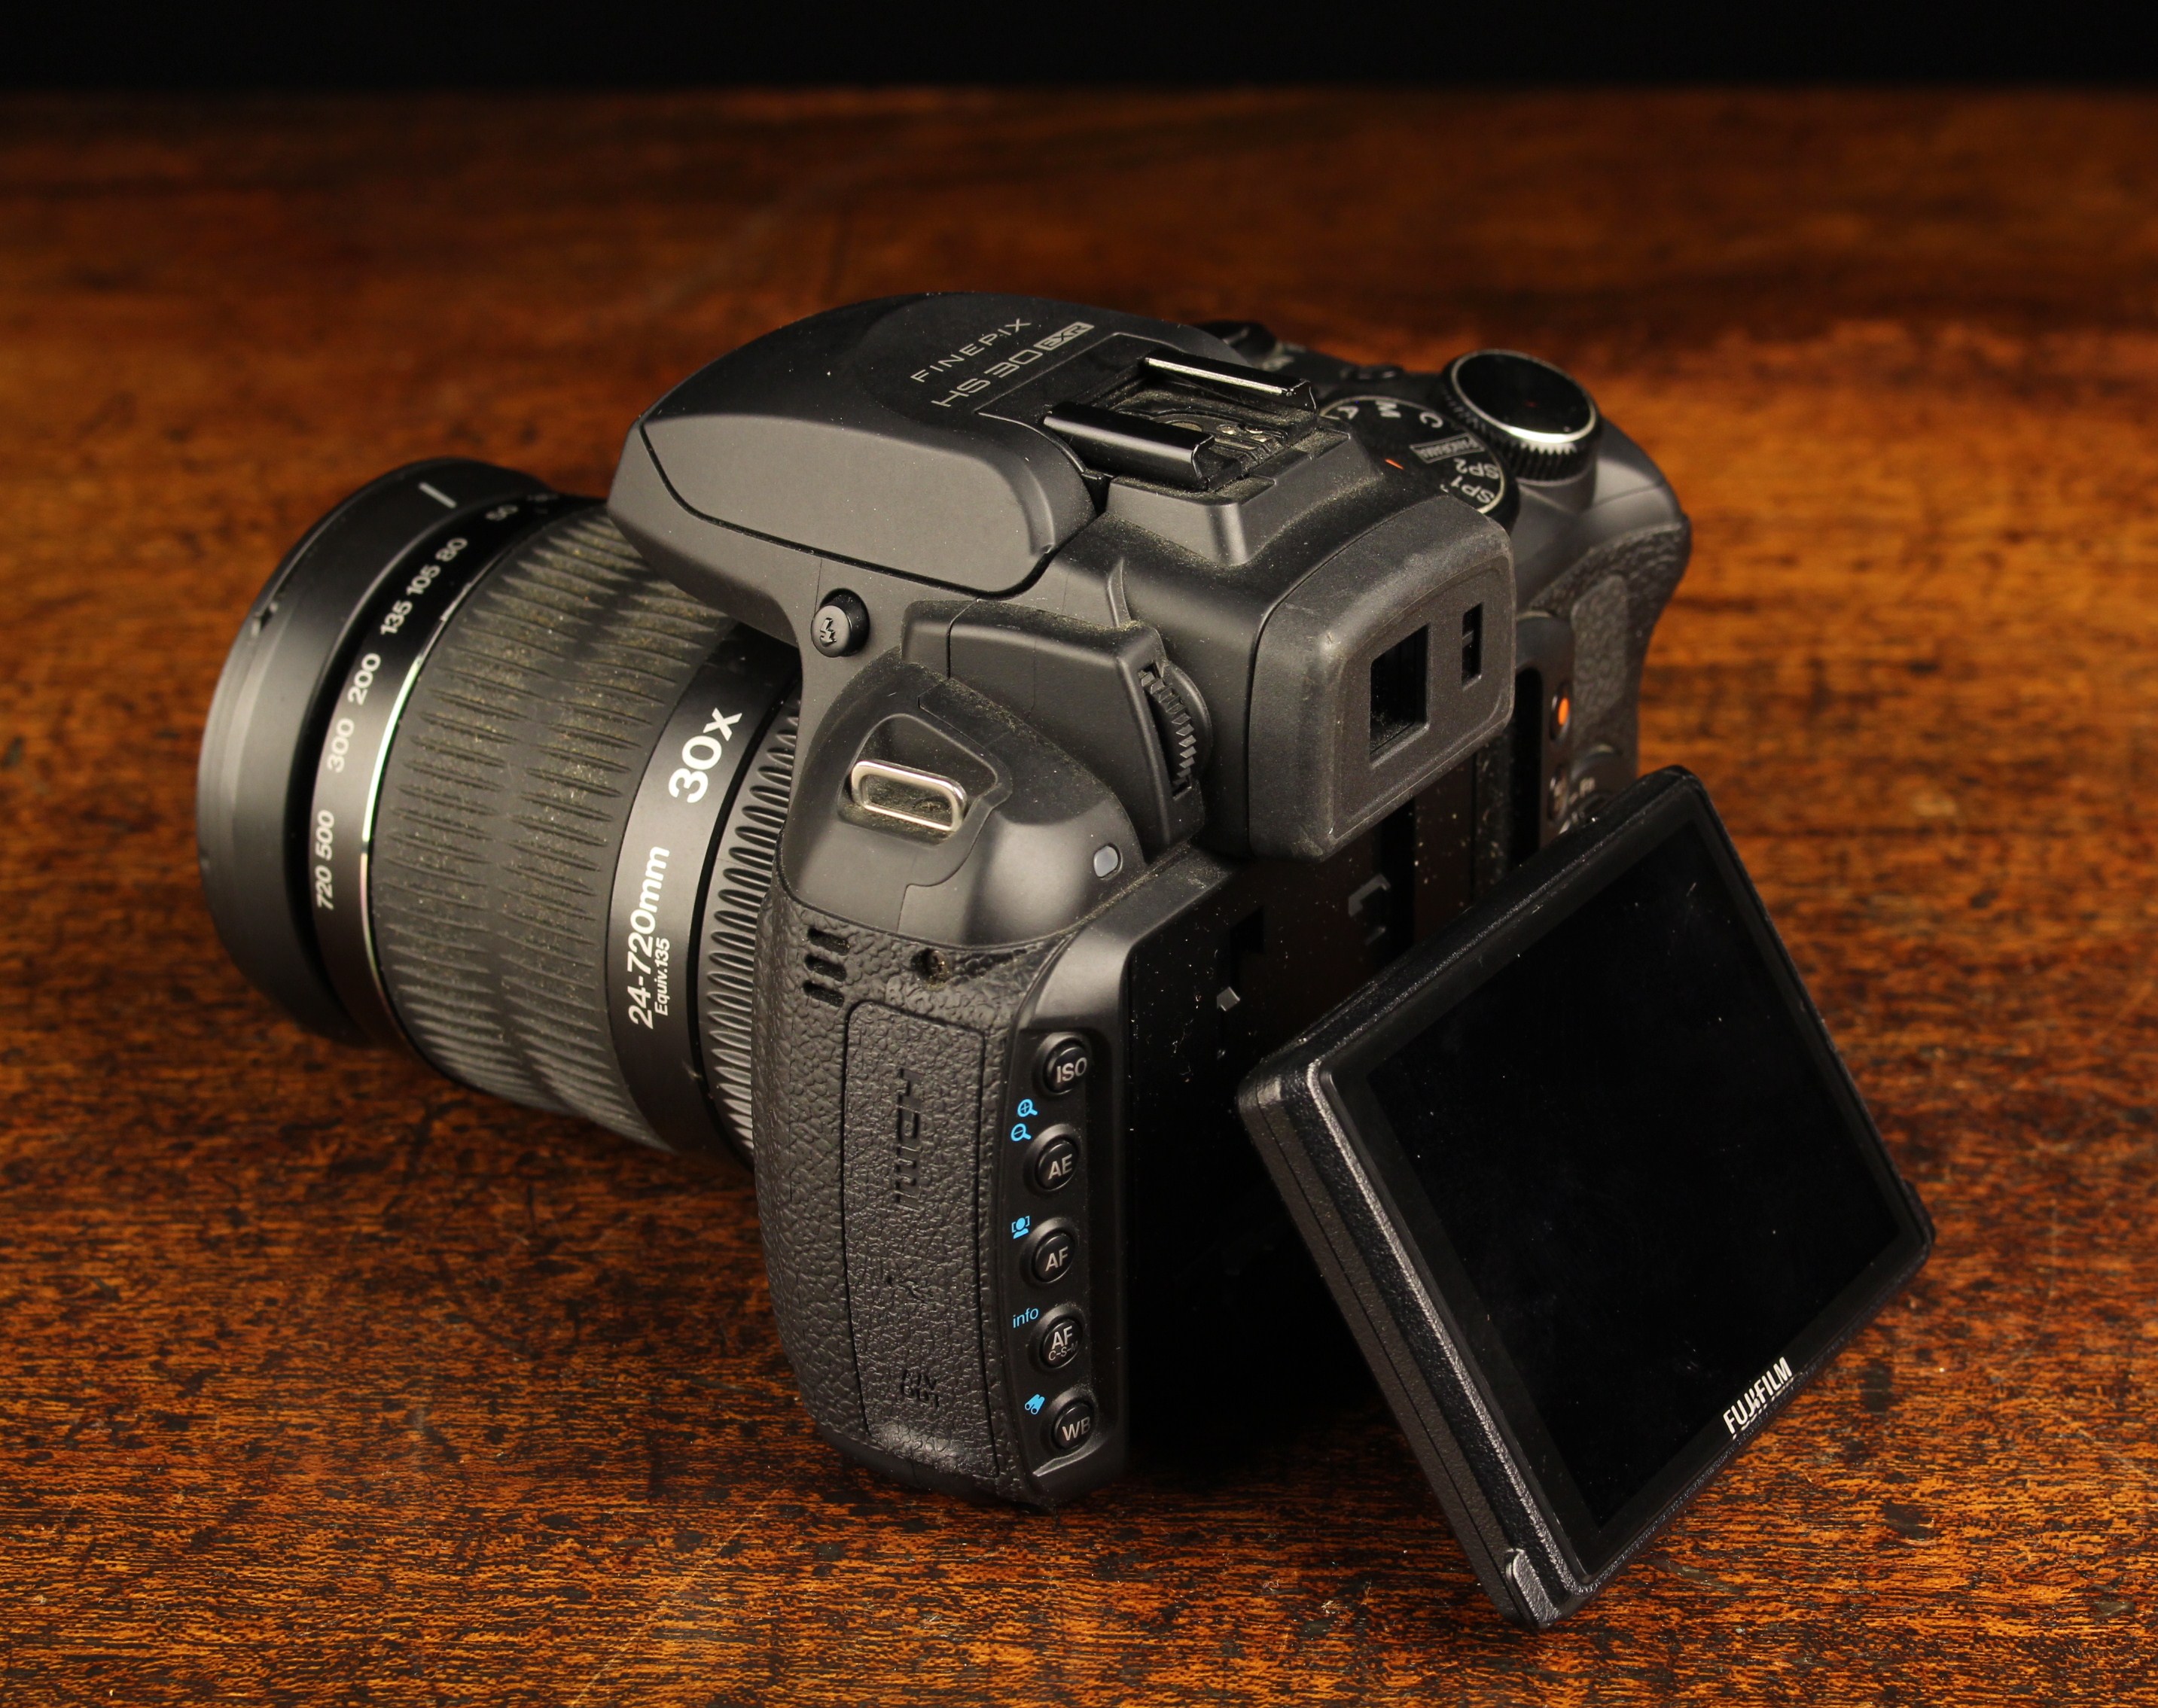 A Fujifilm HS 30 Digital Camera with 24-72 mm zoom lens, a Kenko 4 GB card, - Image 3 of 3